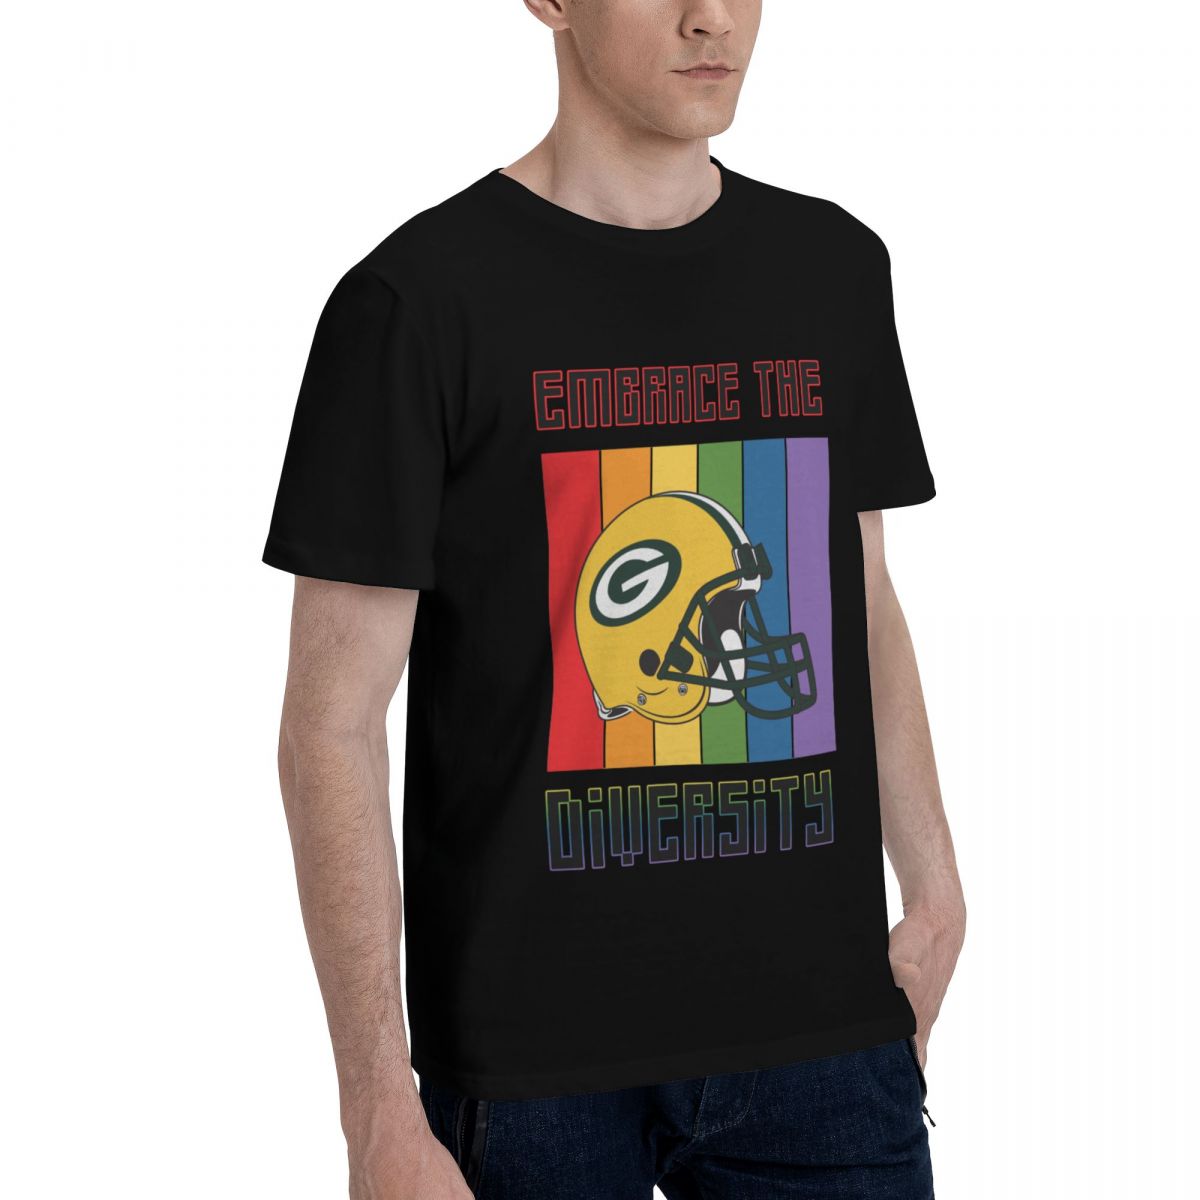 Green Bay Packers Embrace The Diversity Men's Cotton Shirt